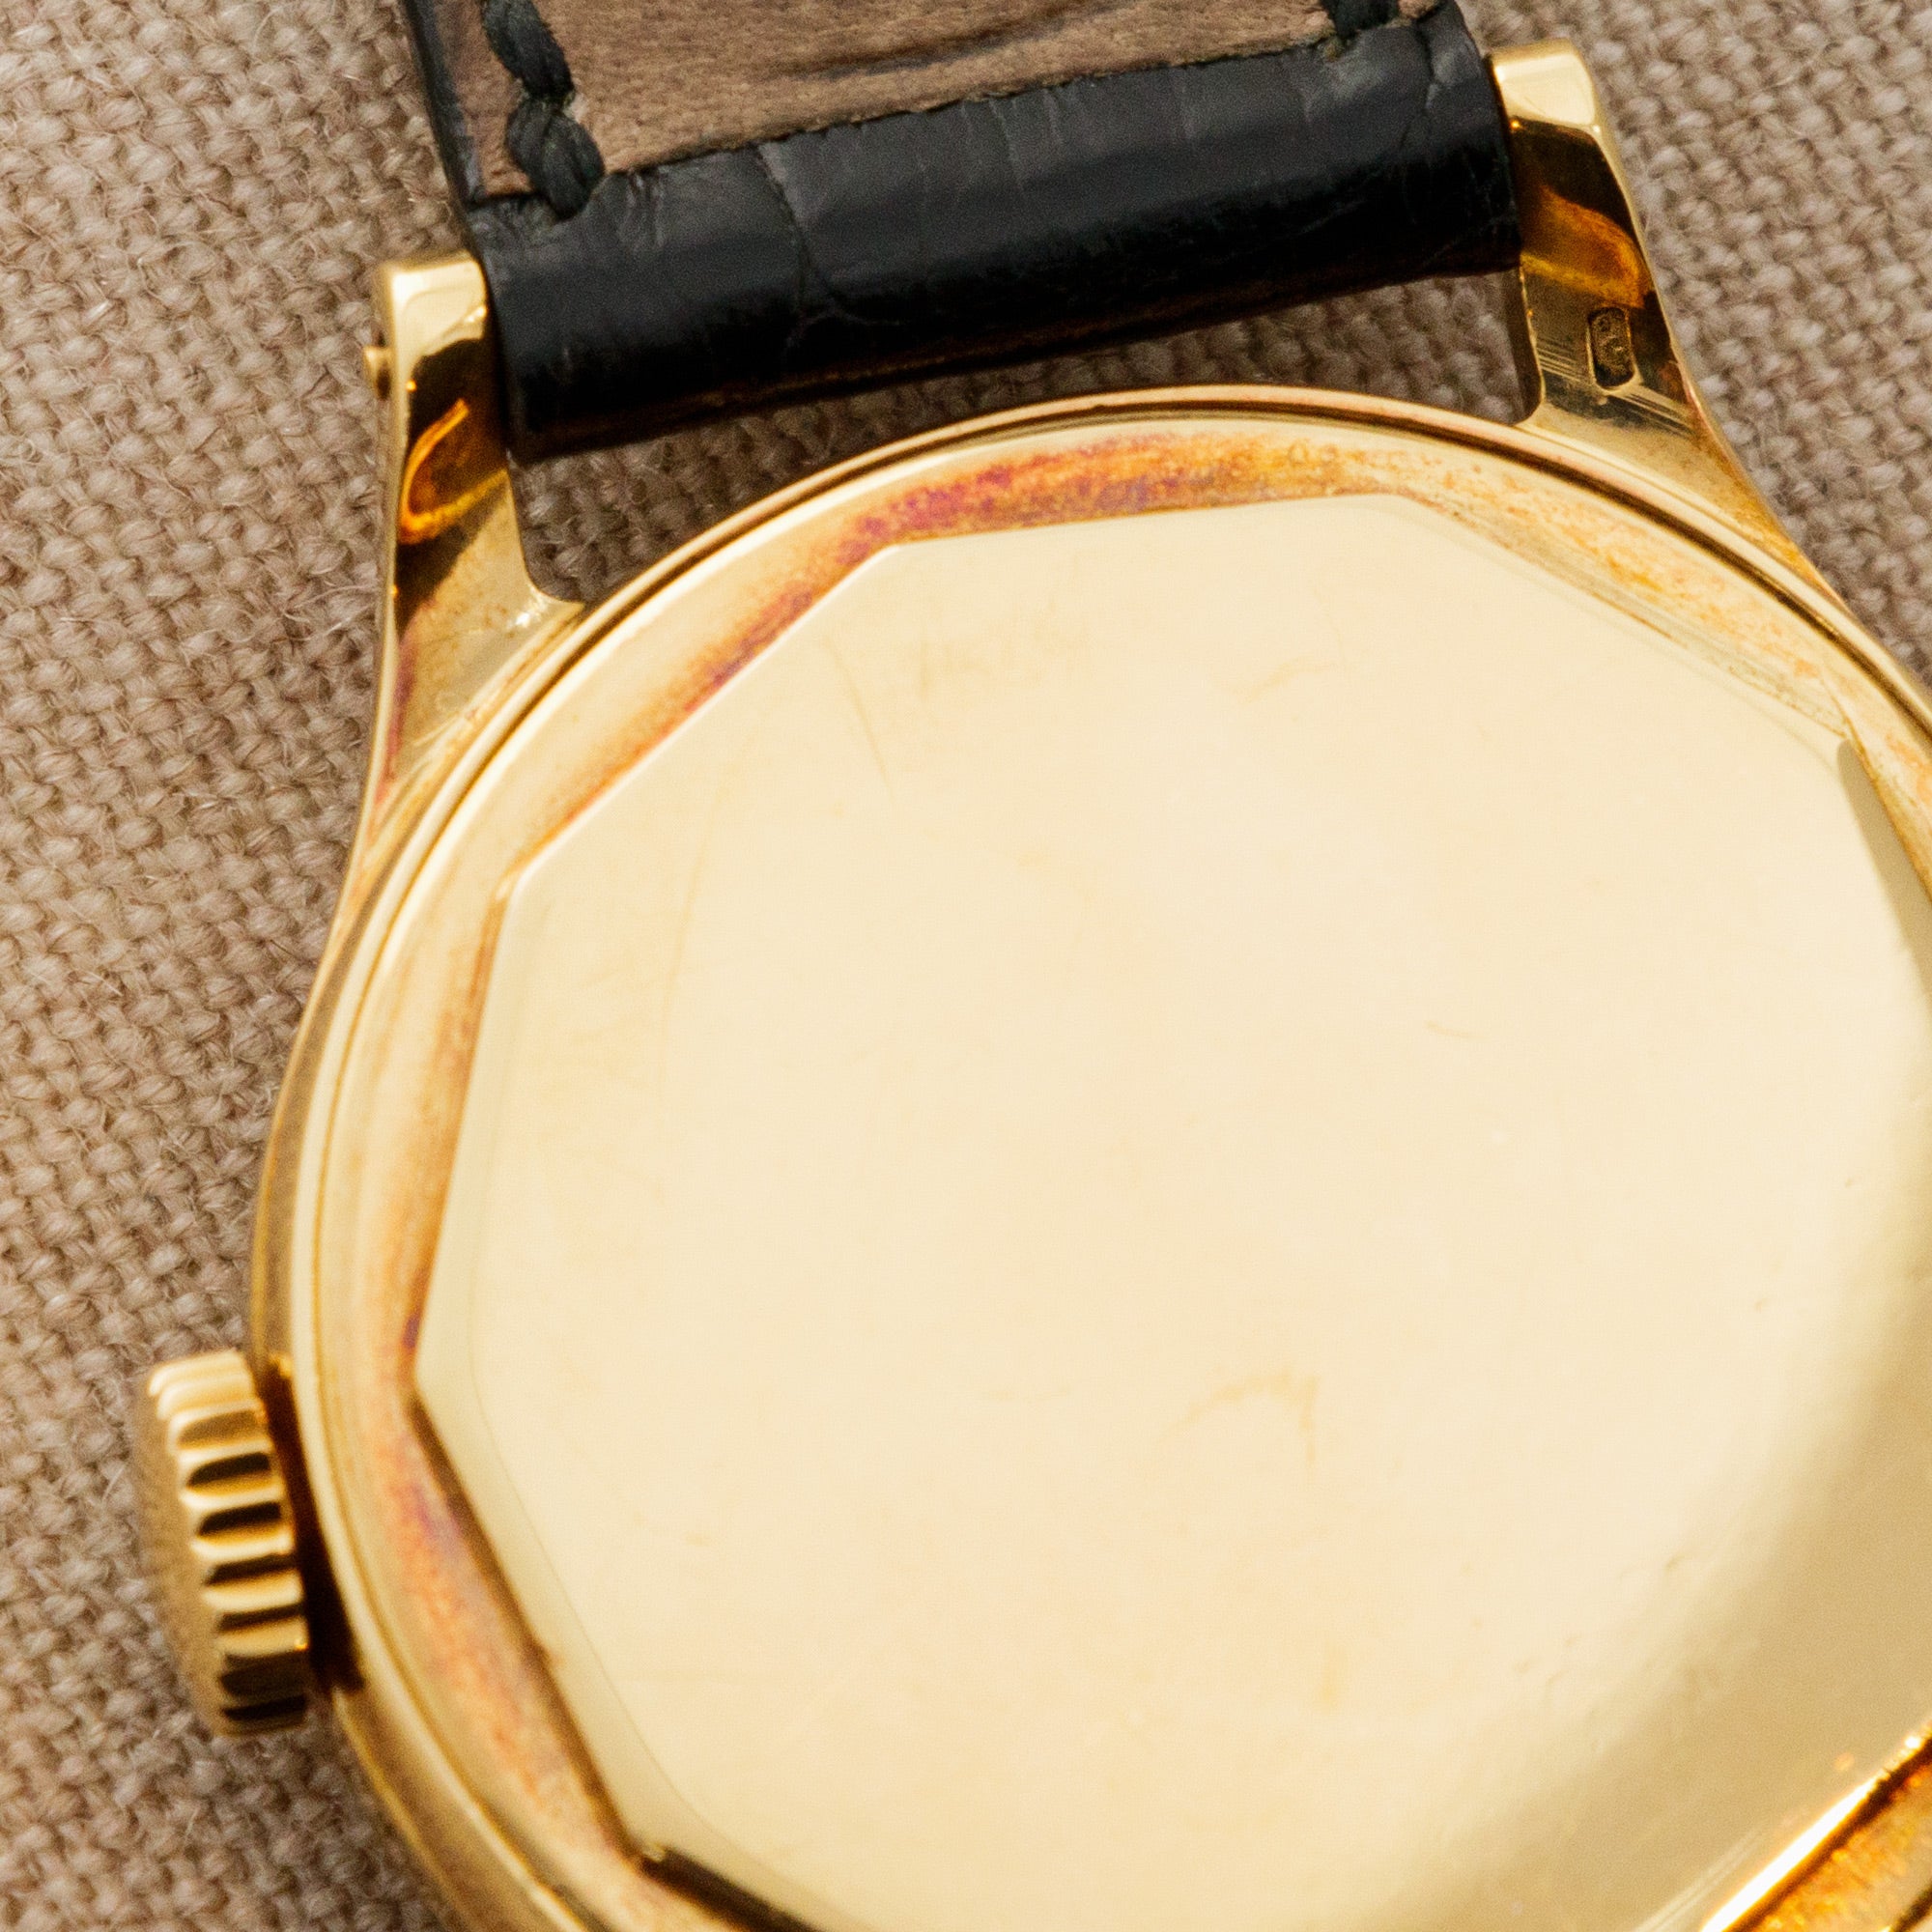 Patek Philippe - Patek Philippe Yellow Gold Calatrava Ref. 2451, Retailed by Gubelin - The Keystone Watches